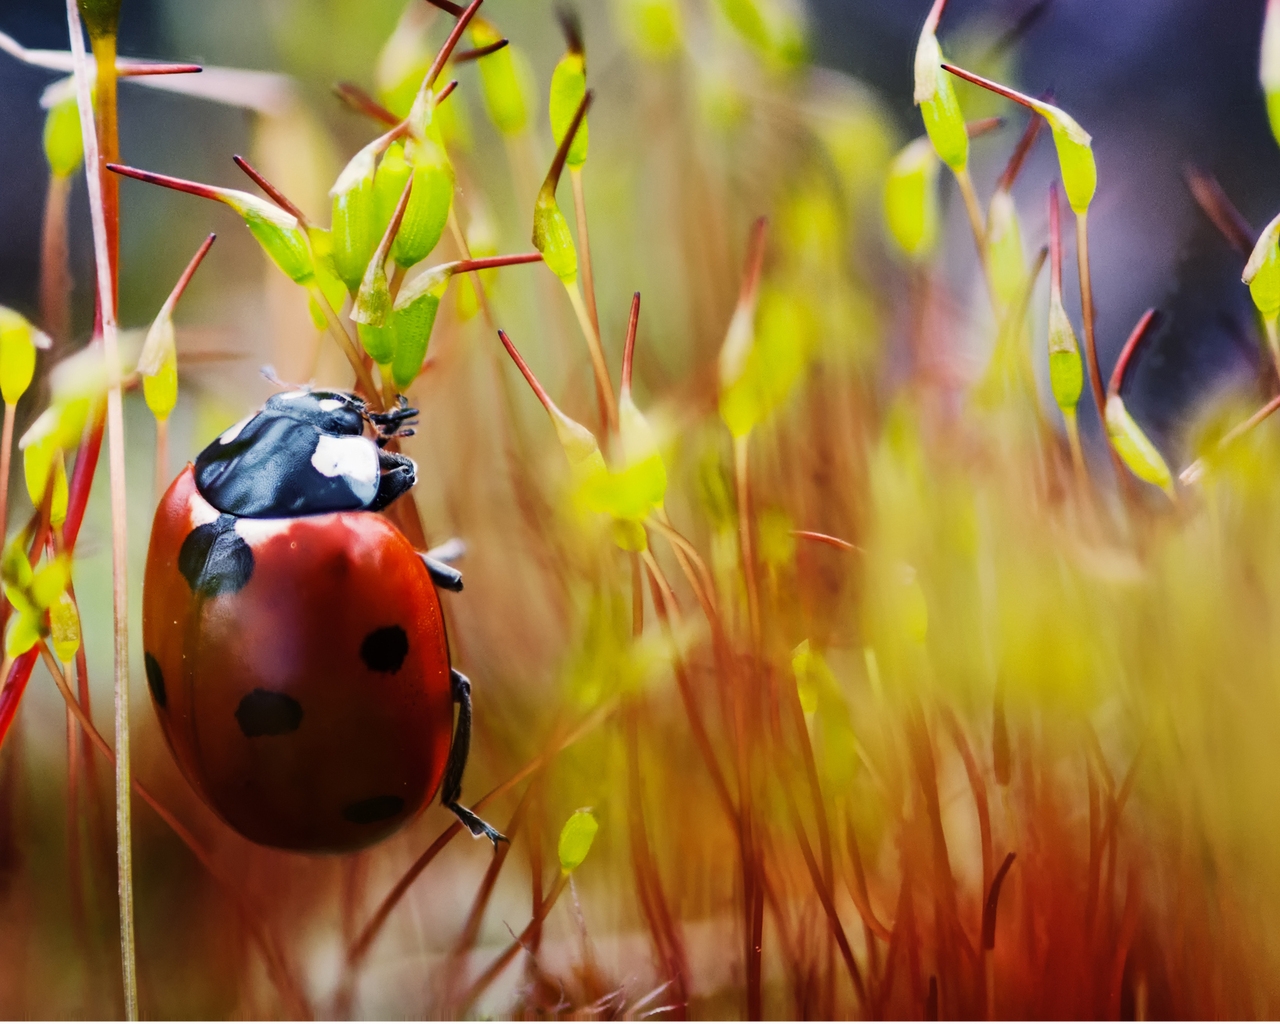 Red Ladybug Macro Photo for 1280 x 1024 resolution